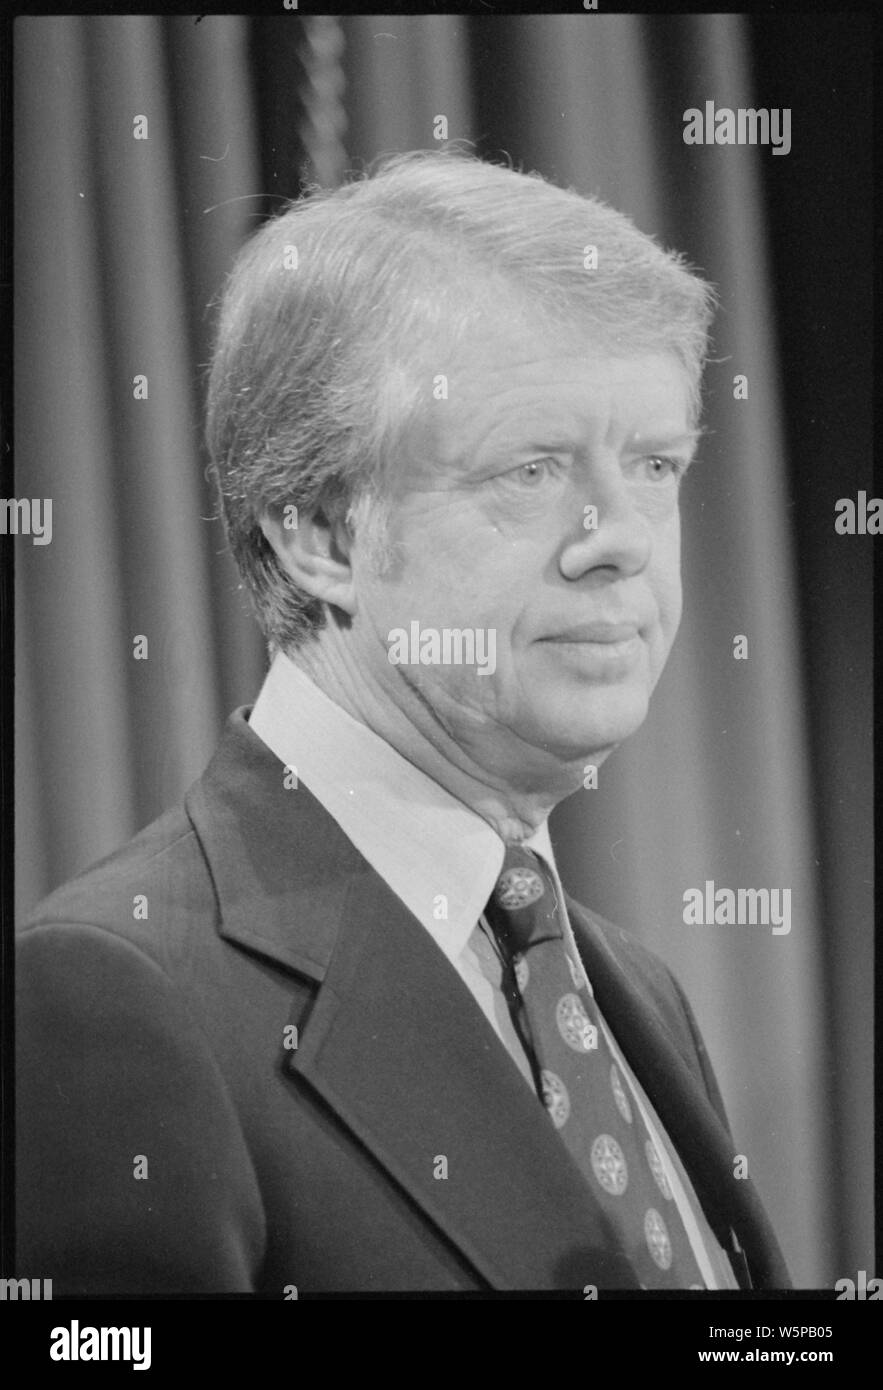 Jimmy Carter head shot Foto de stock